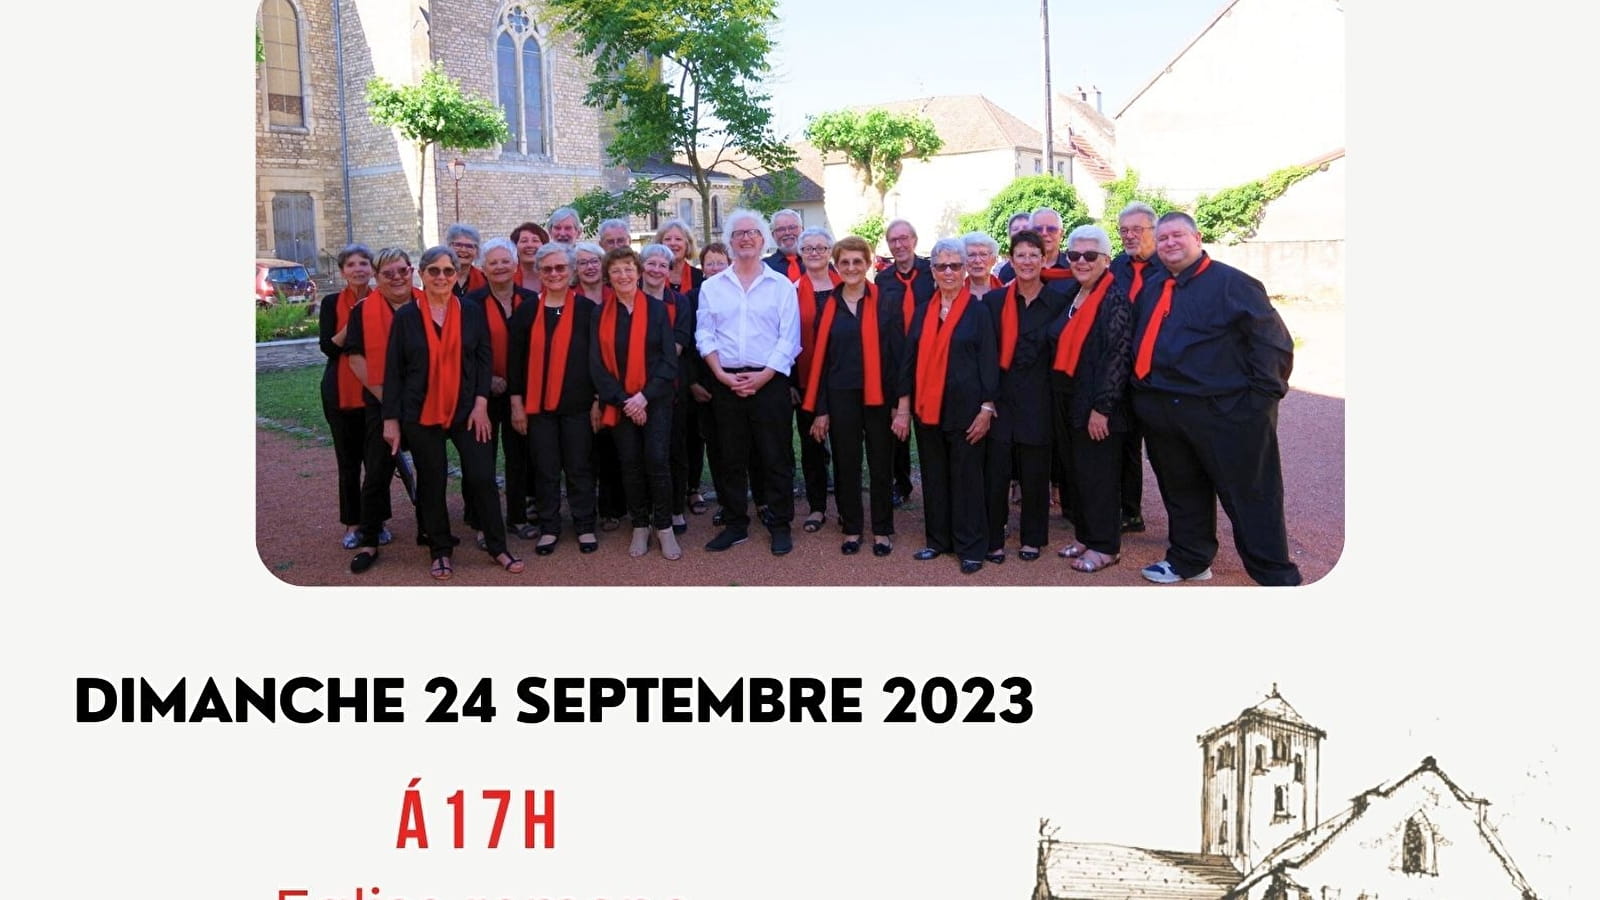 Musical performance by the Saône Mélodie choir